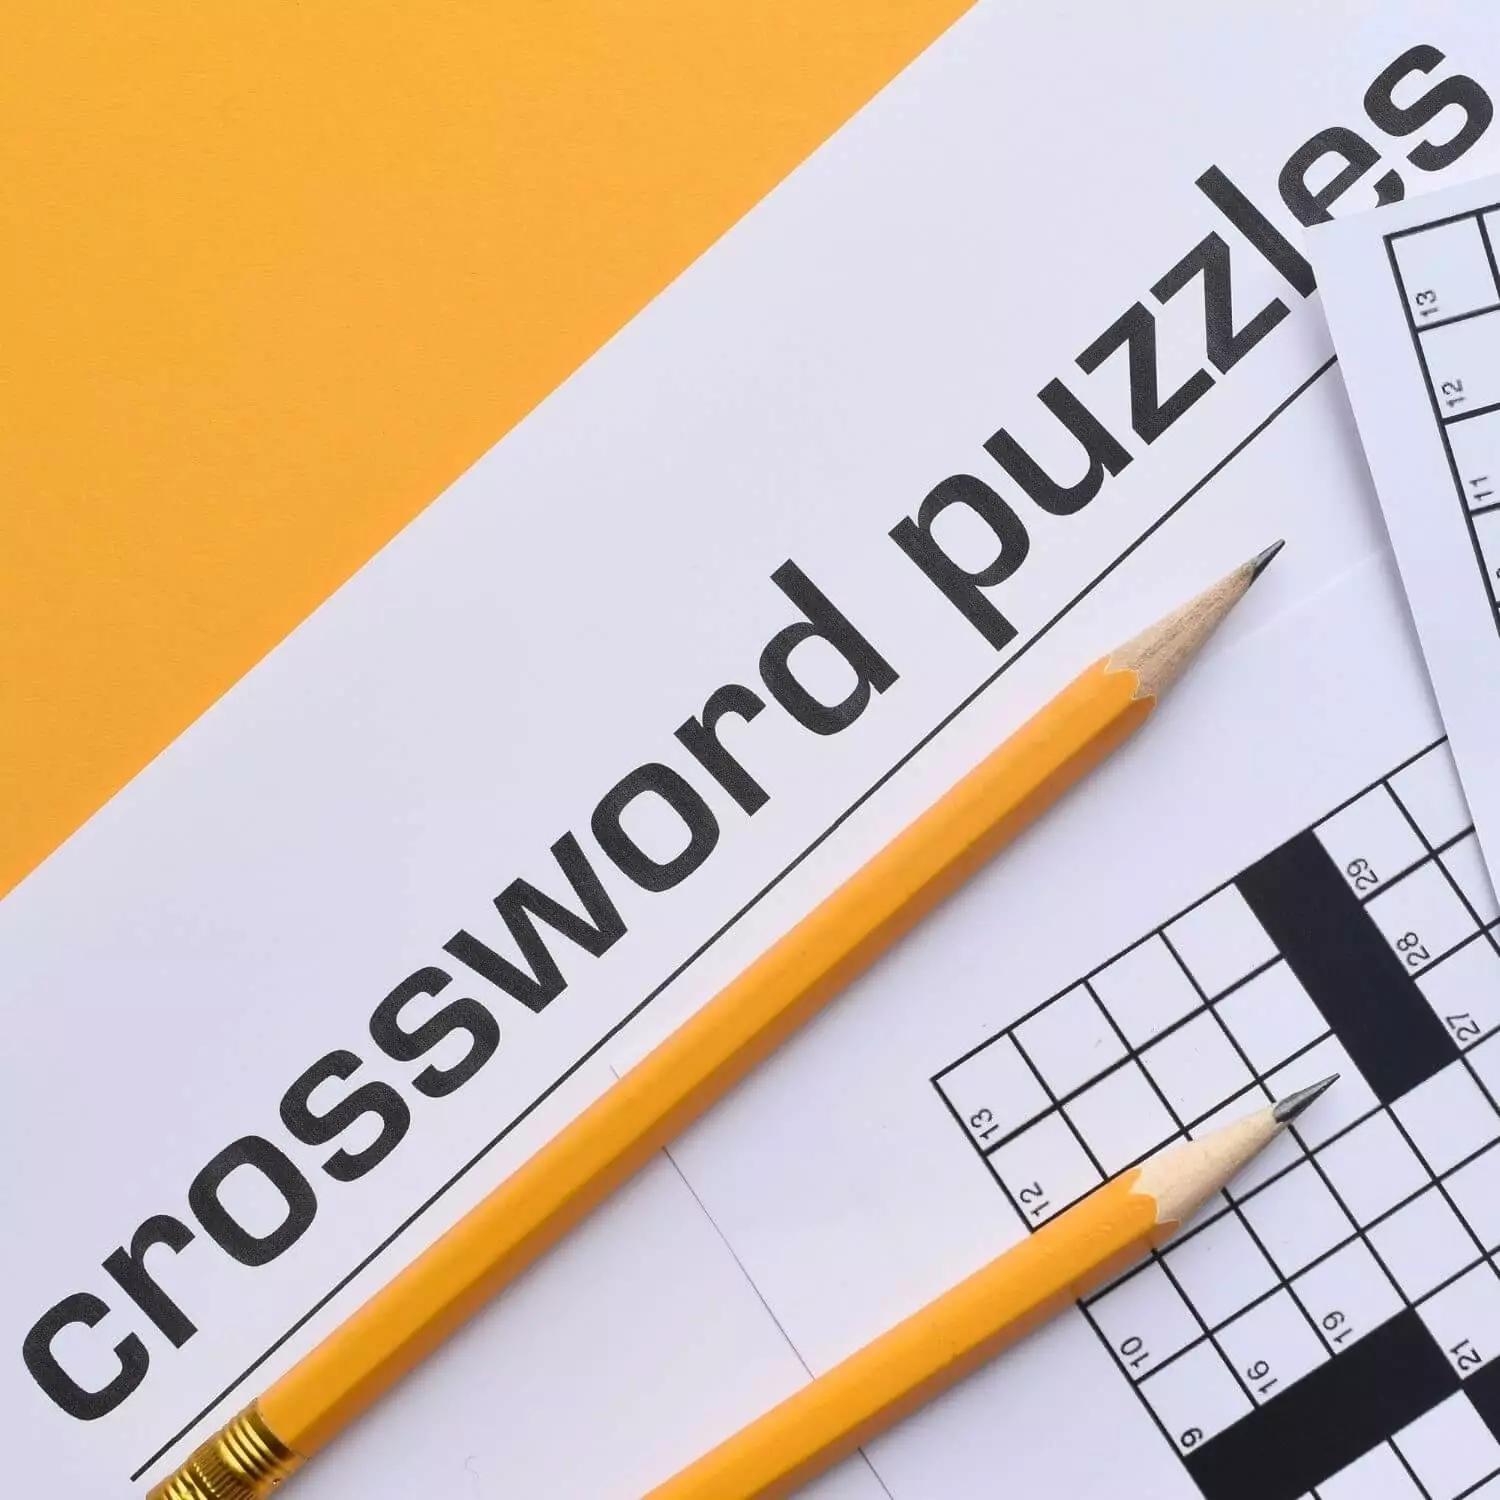 crossword solver